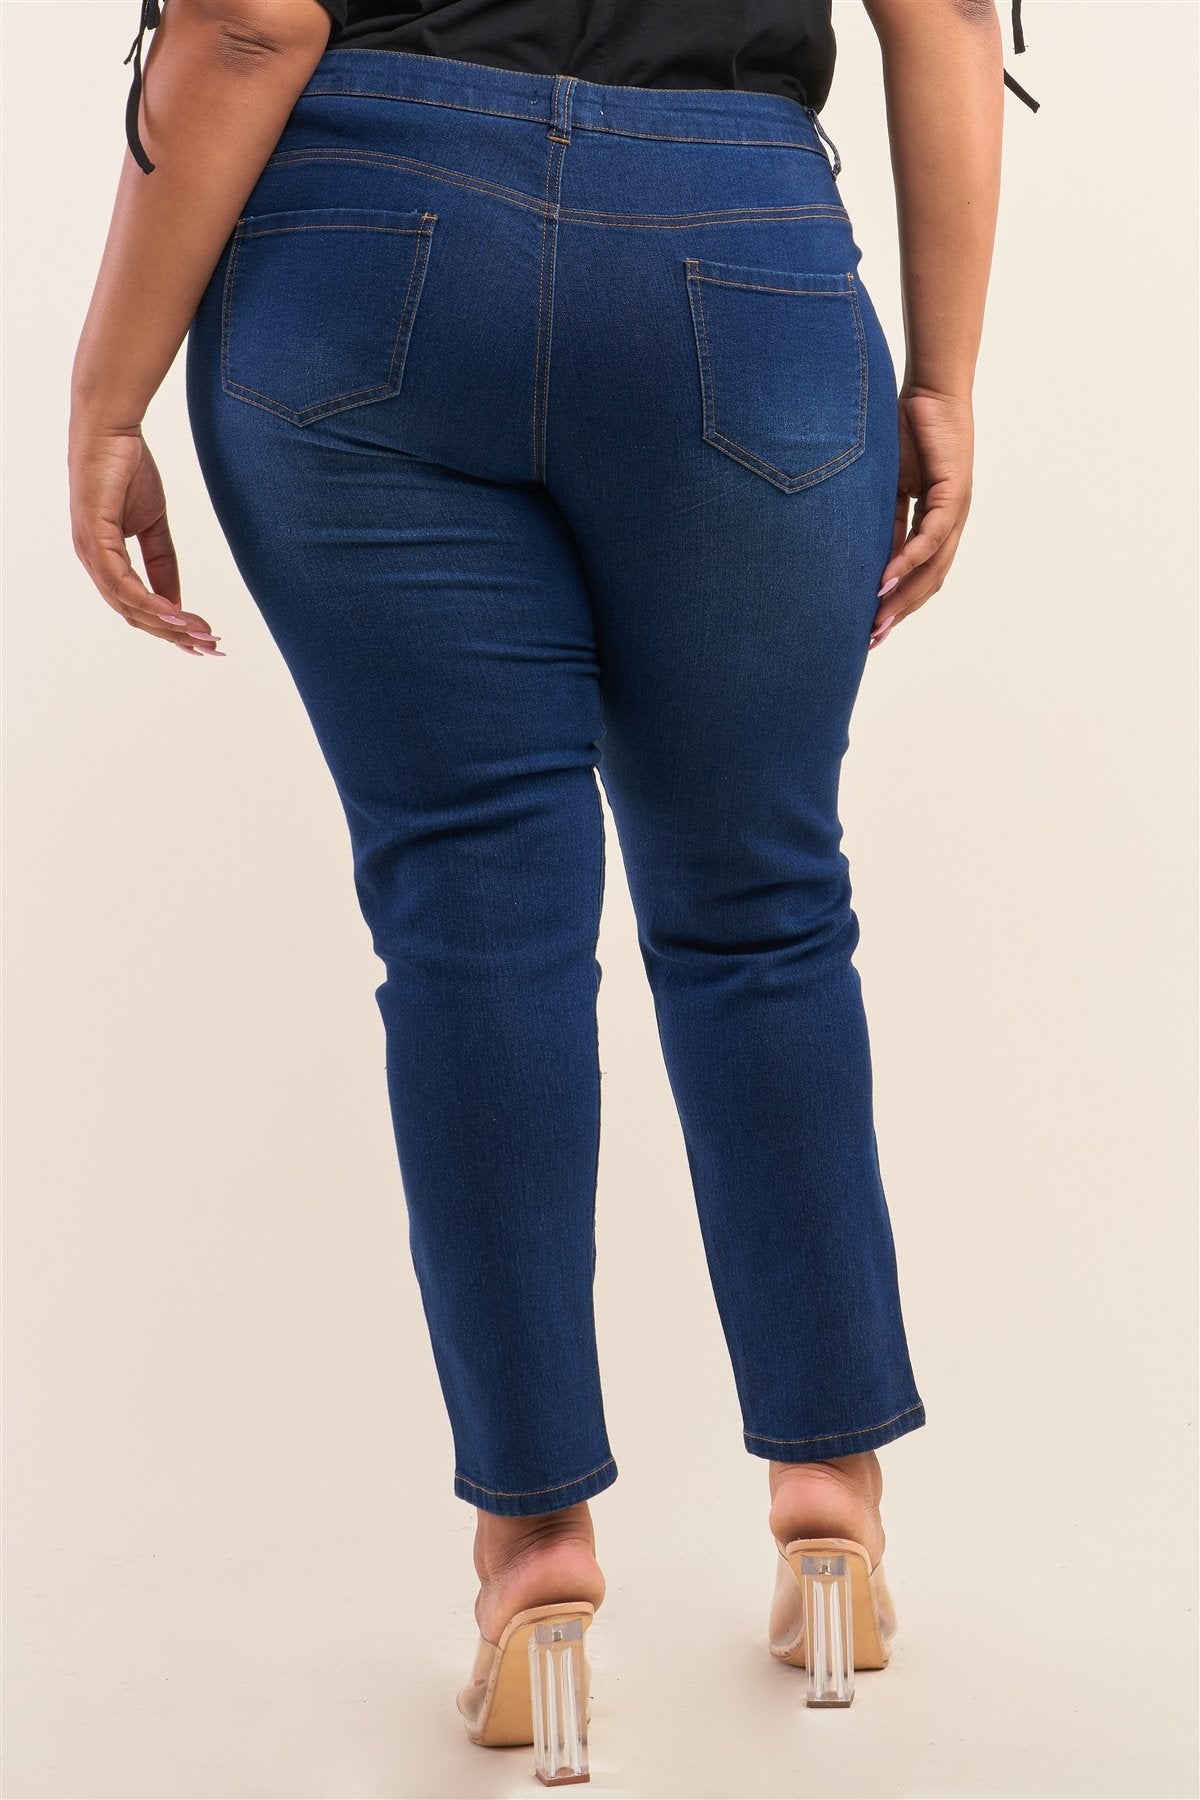 Plus Size Low-mid Rise Straight Cut Denim Pants Plus Size Low-mid Rise Straight Cut Denim Pants - M&R CORNER M&R CORNER